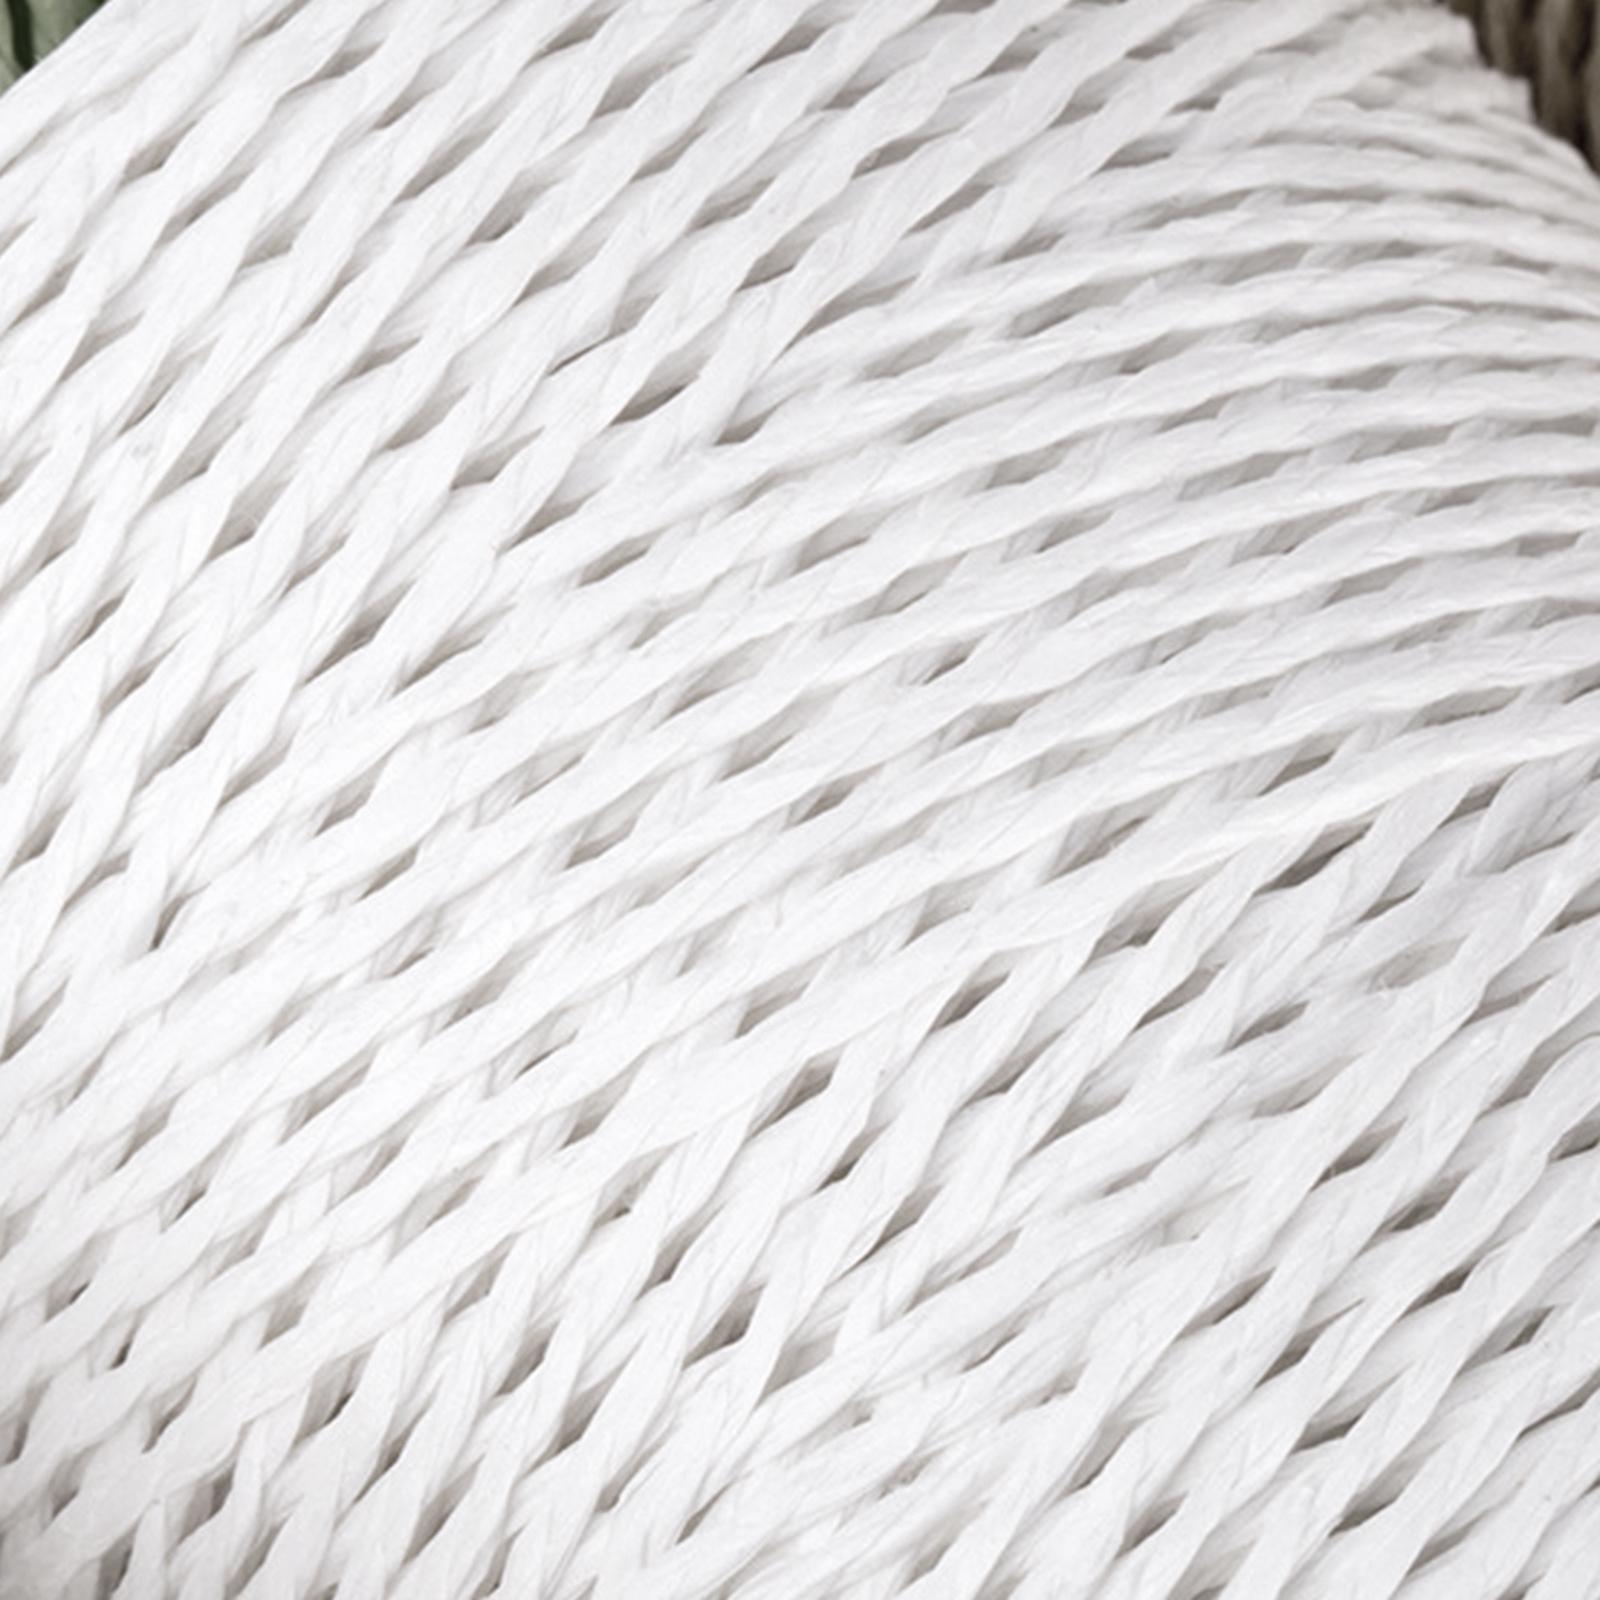 Raffia Paper Yarn Twine Gift Wrapping DIY Craft Box Weaving Crocheting